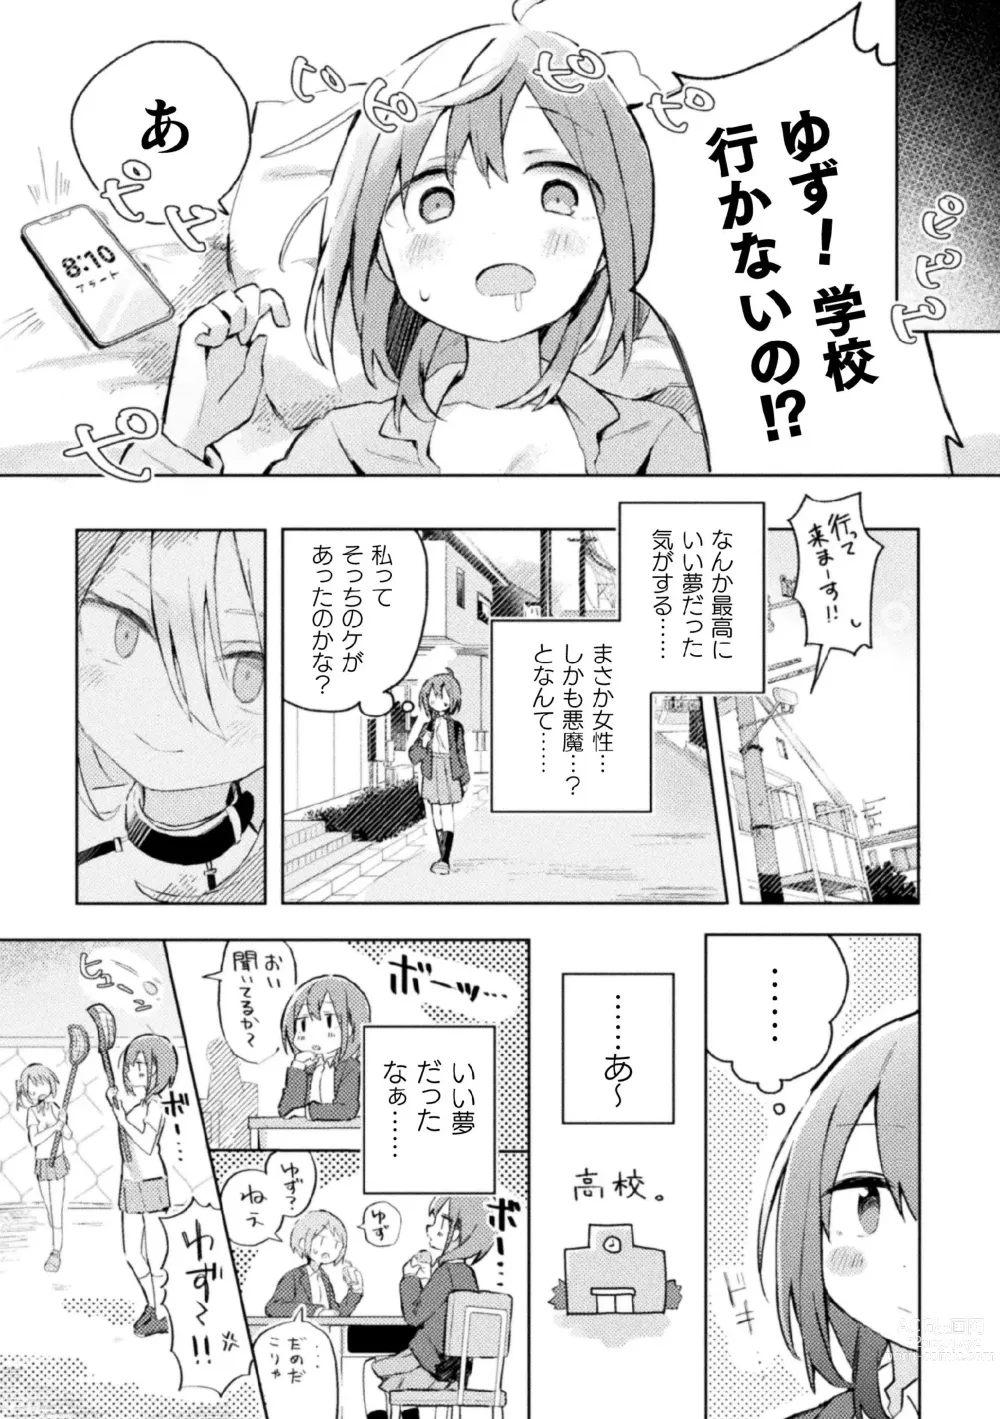 Page 6 of manga 2D Comic Magazine Succubus Yuri H Vol. 2